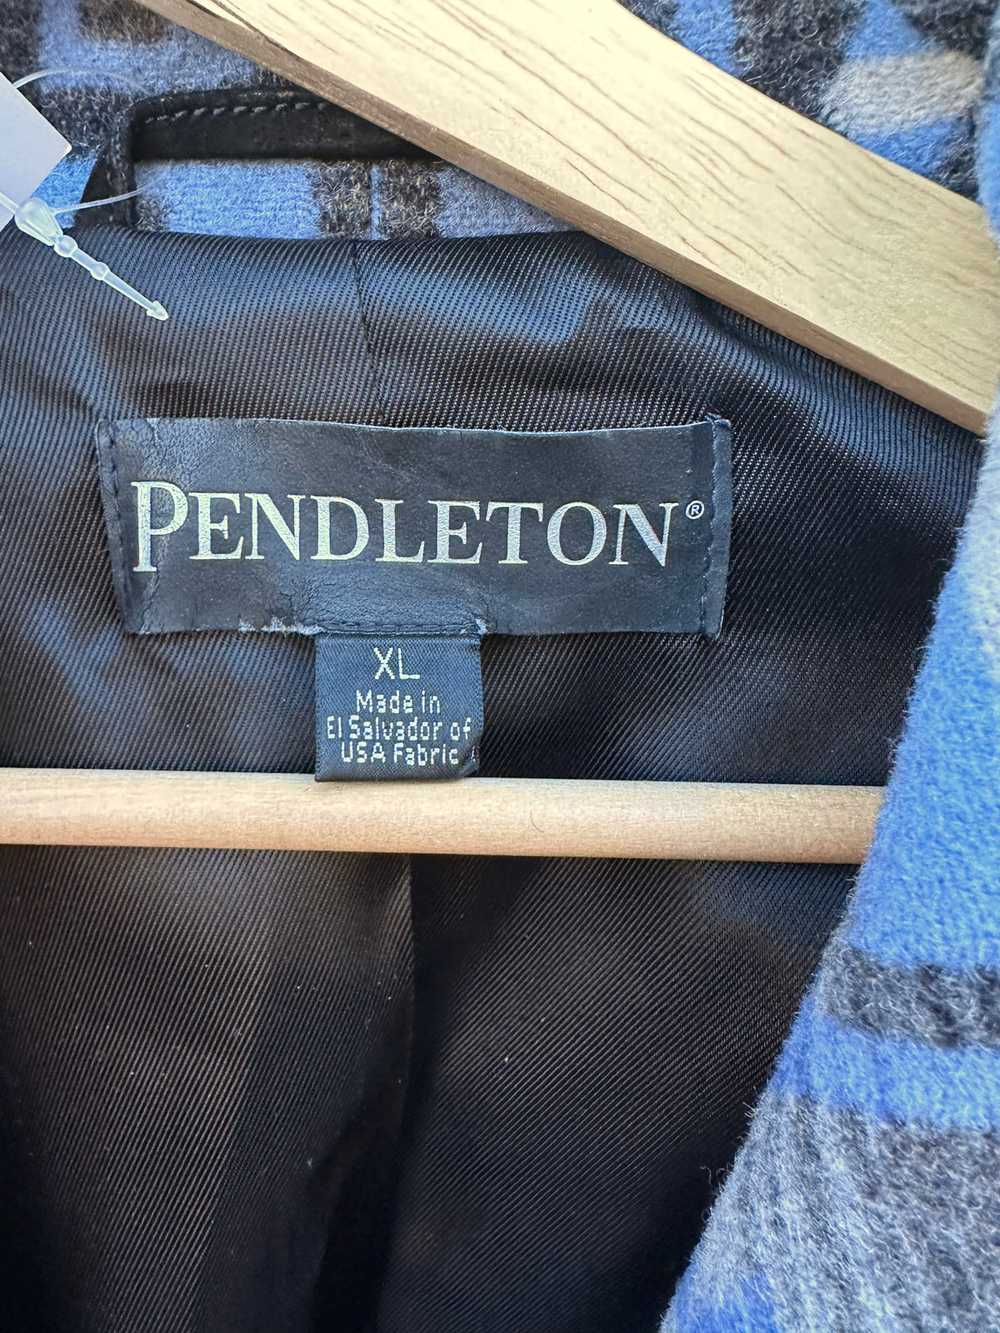 Pendleton Belted Coat - XL - image 6